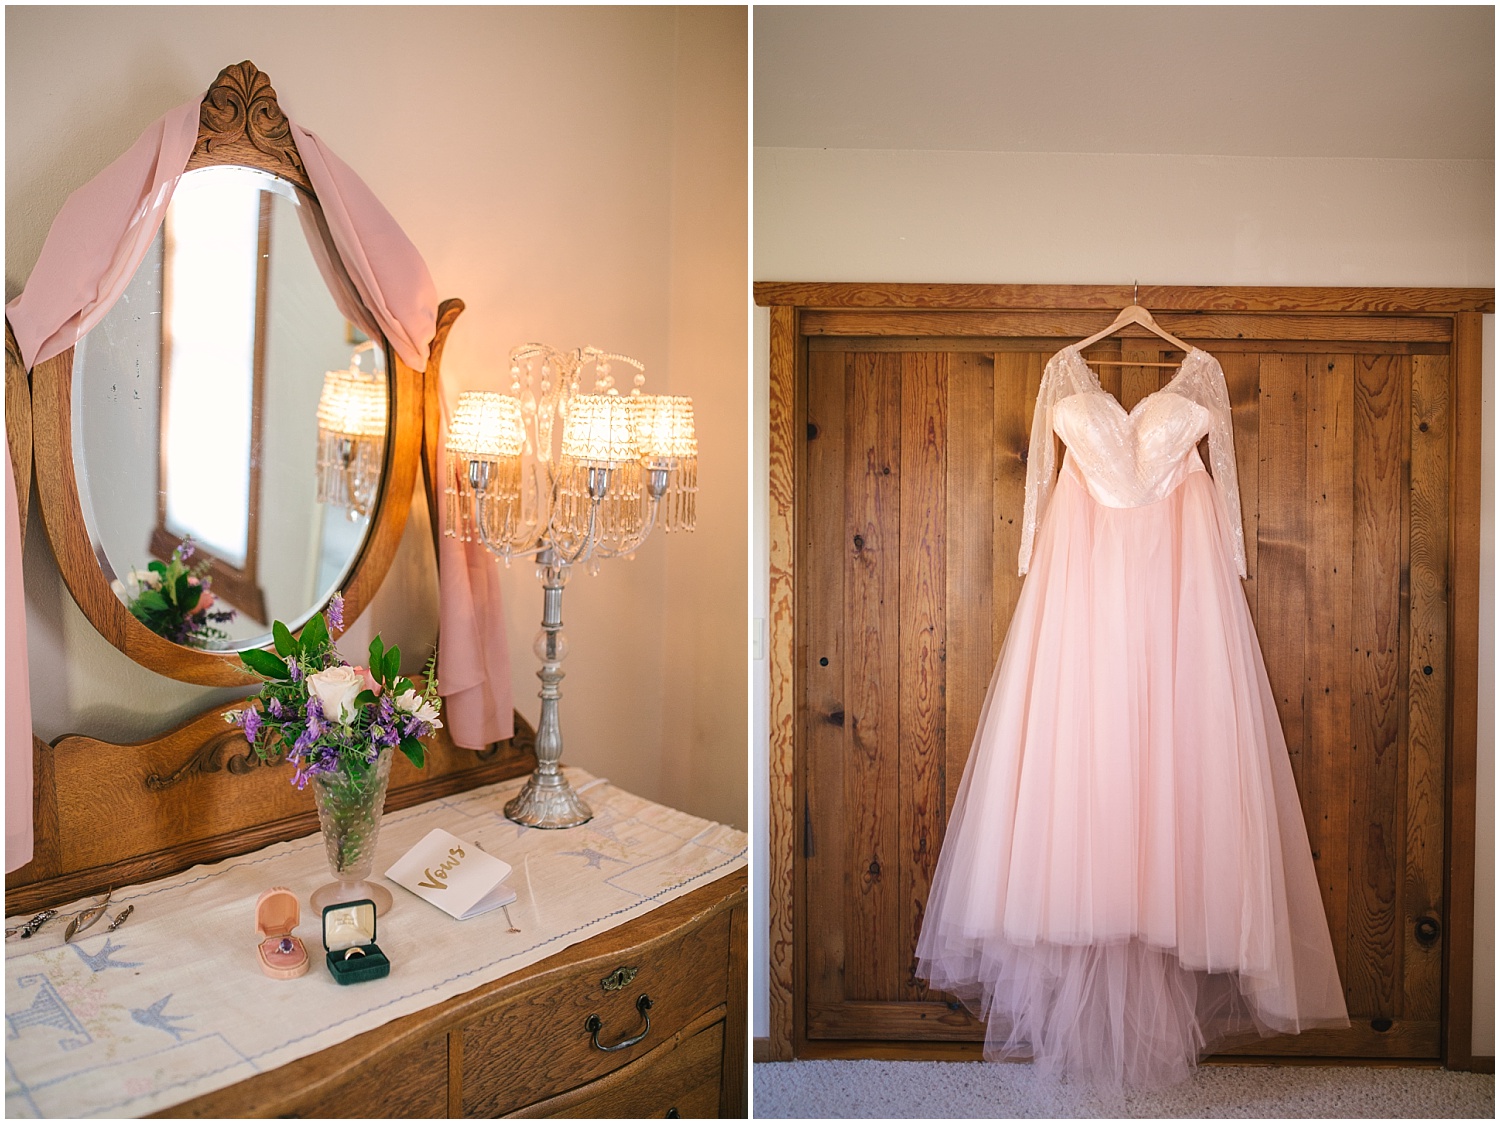 Blush pink wedding dress for intimate mountain cabin wedding